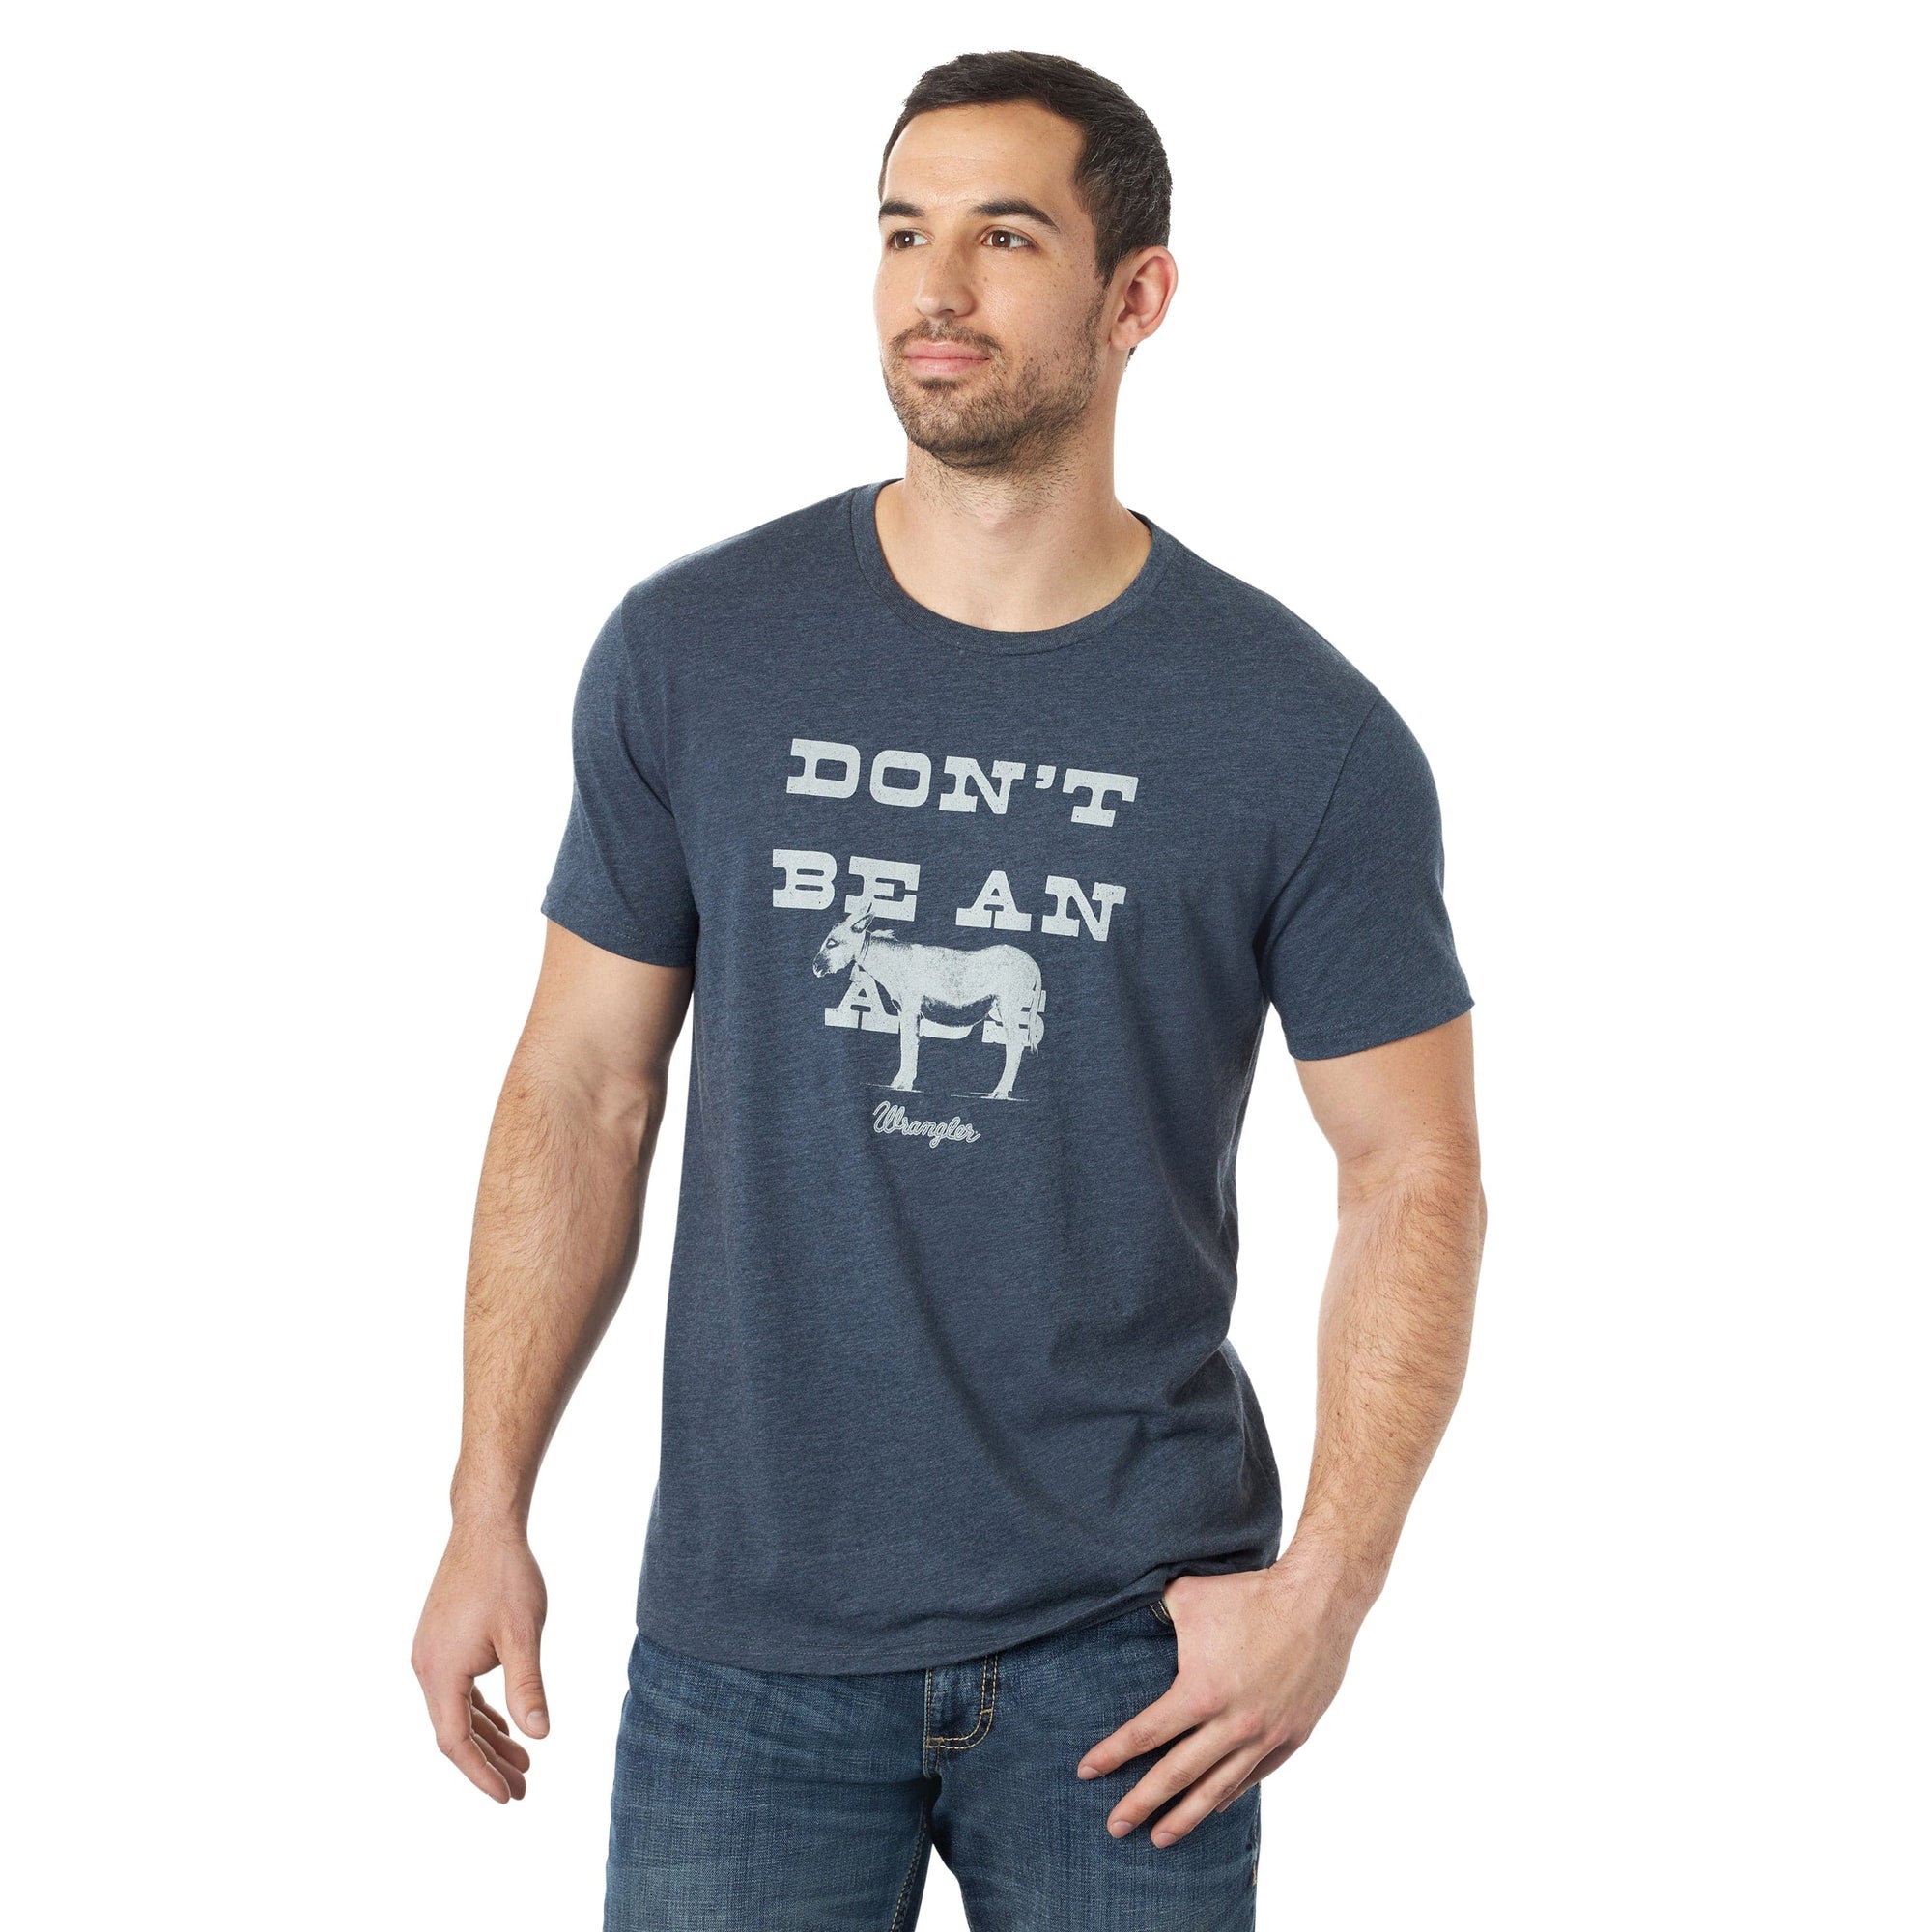 WRANGLER Shirts Wrangler Men's Donkey Navy Heather Graphic Tee - MQ6210B